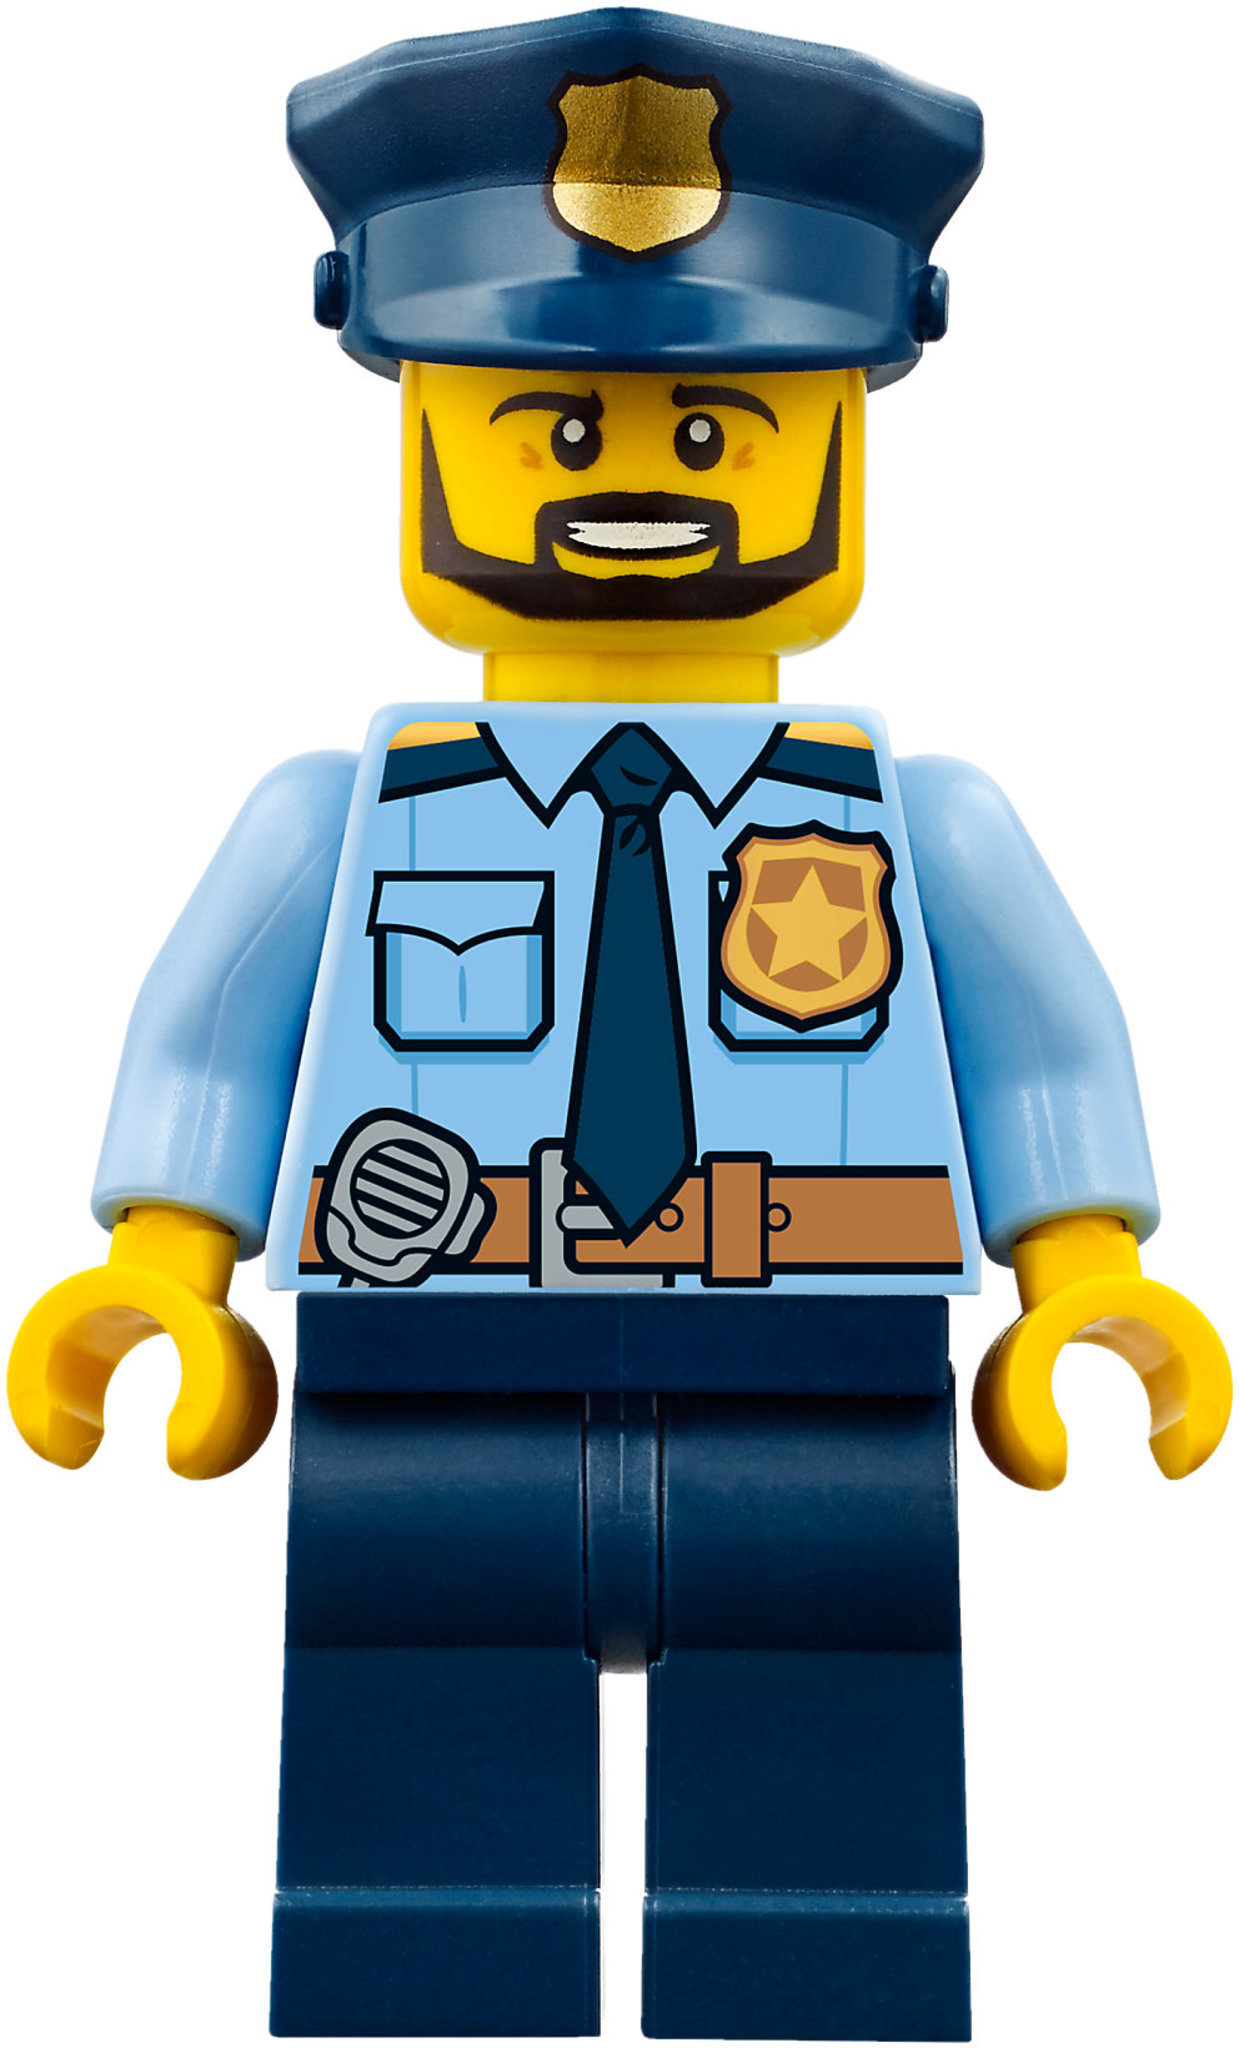 LEGO City 60141 - Police Station | Mattonito